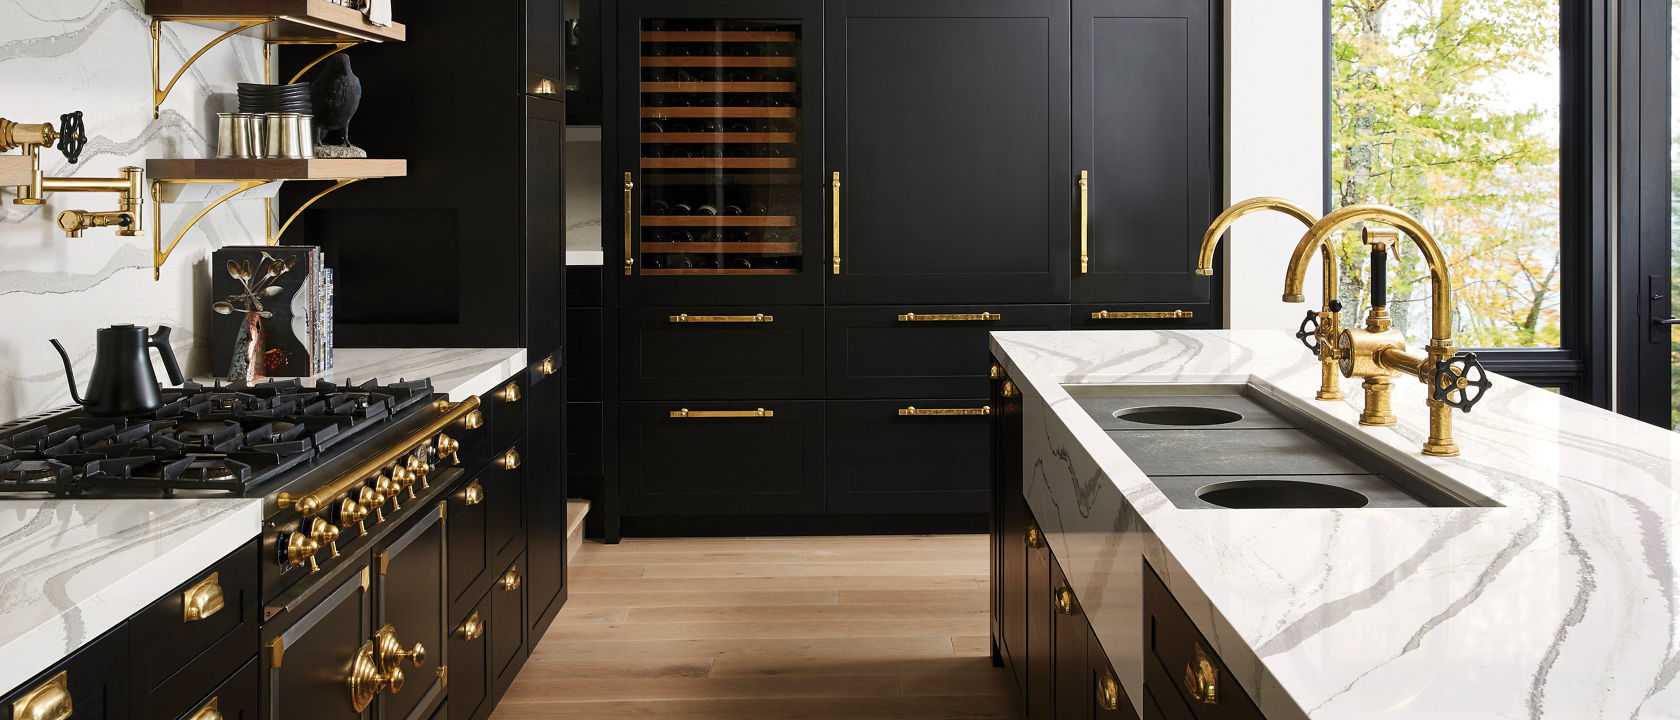 Kitchen featuring black cabinets and Brittanica quartz countertops.